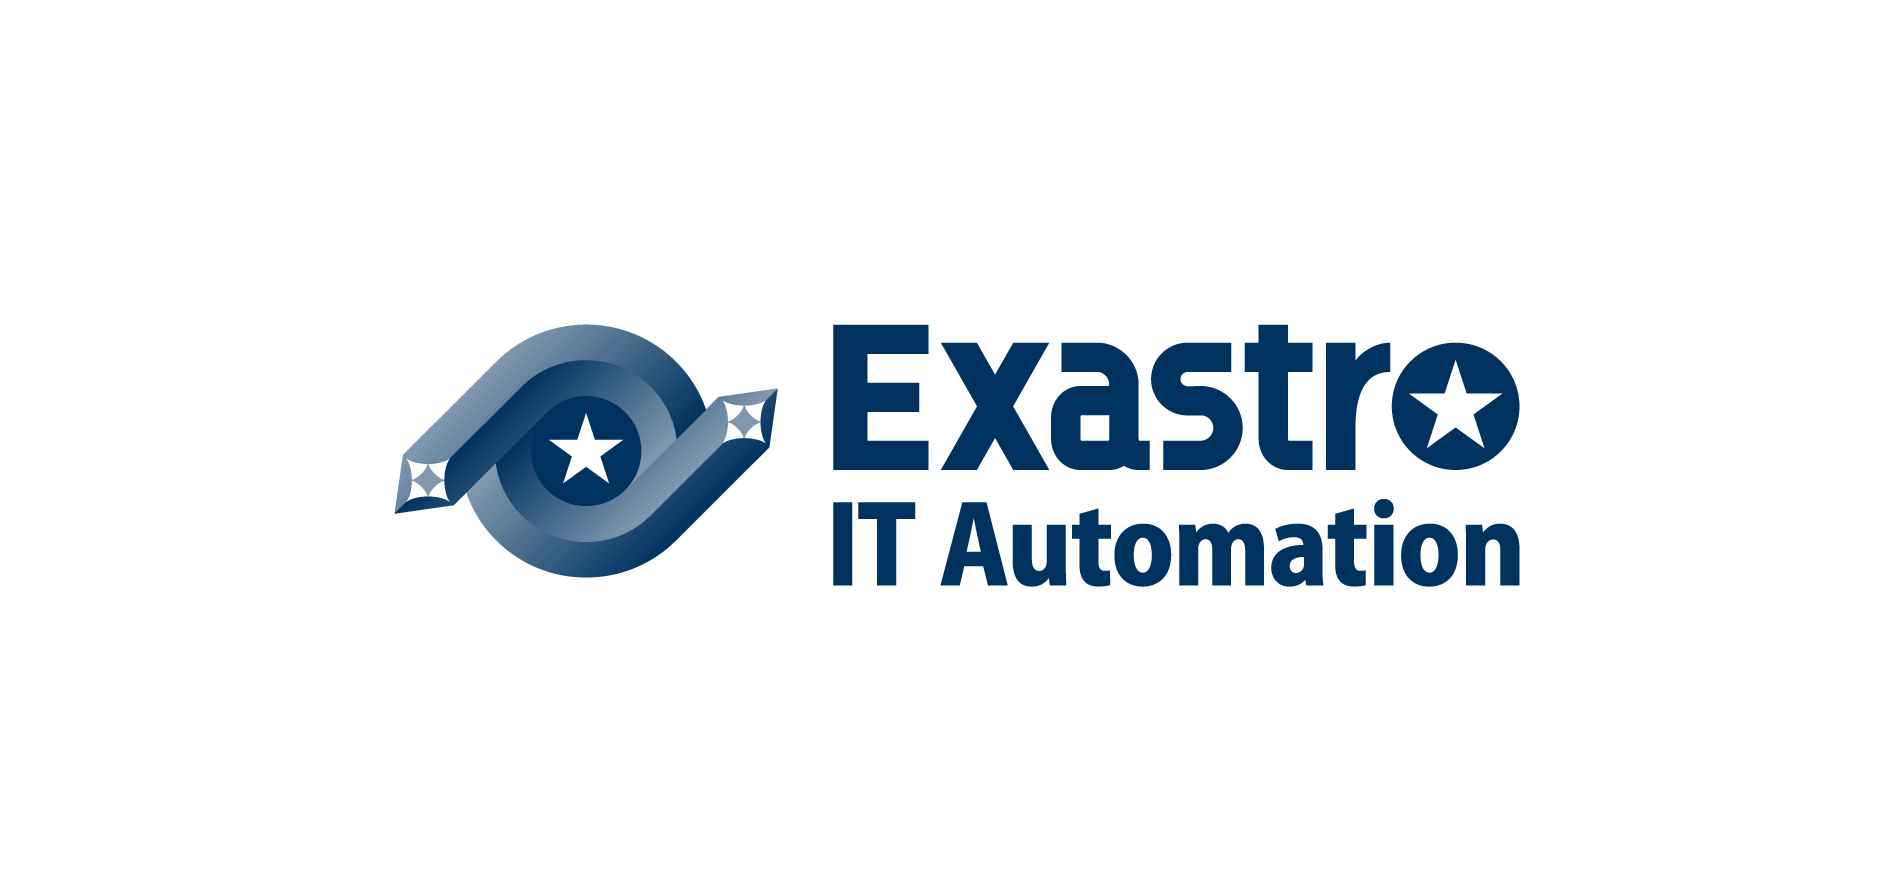 Exastro IT Automation